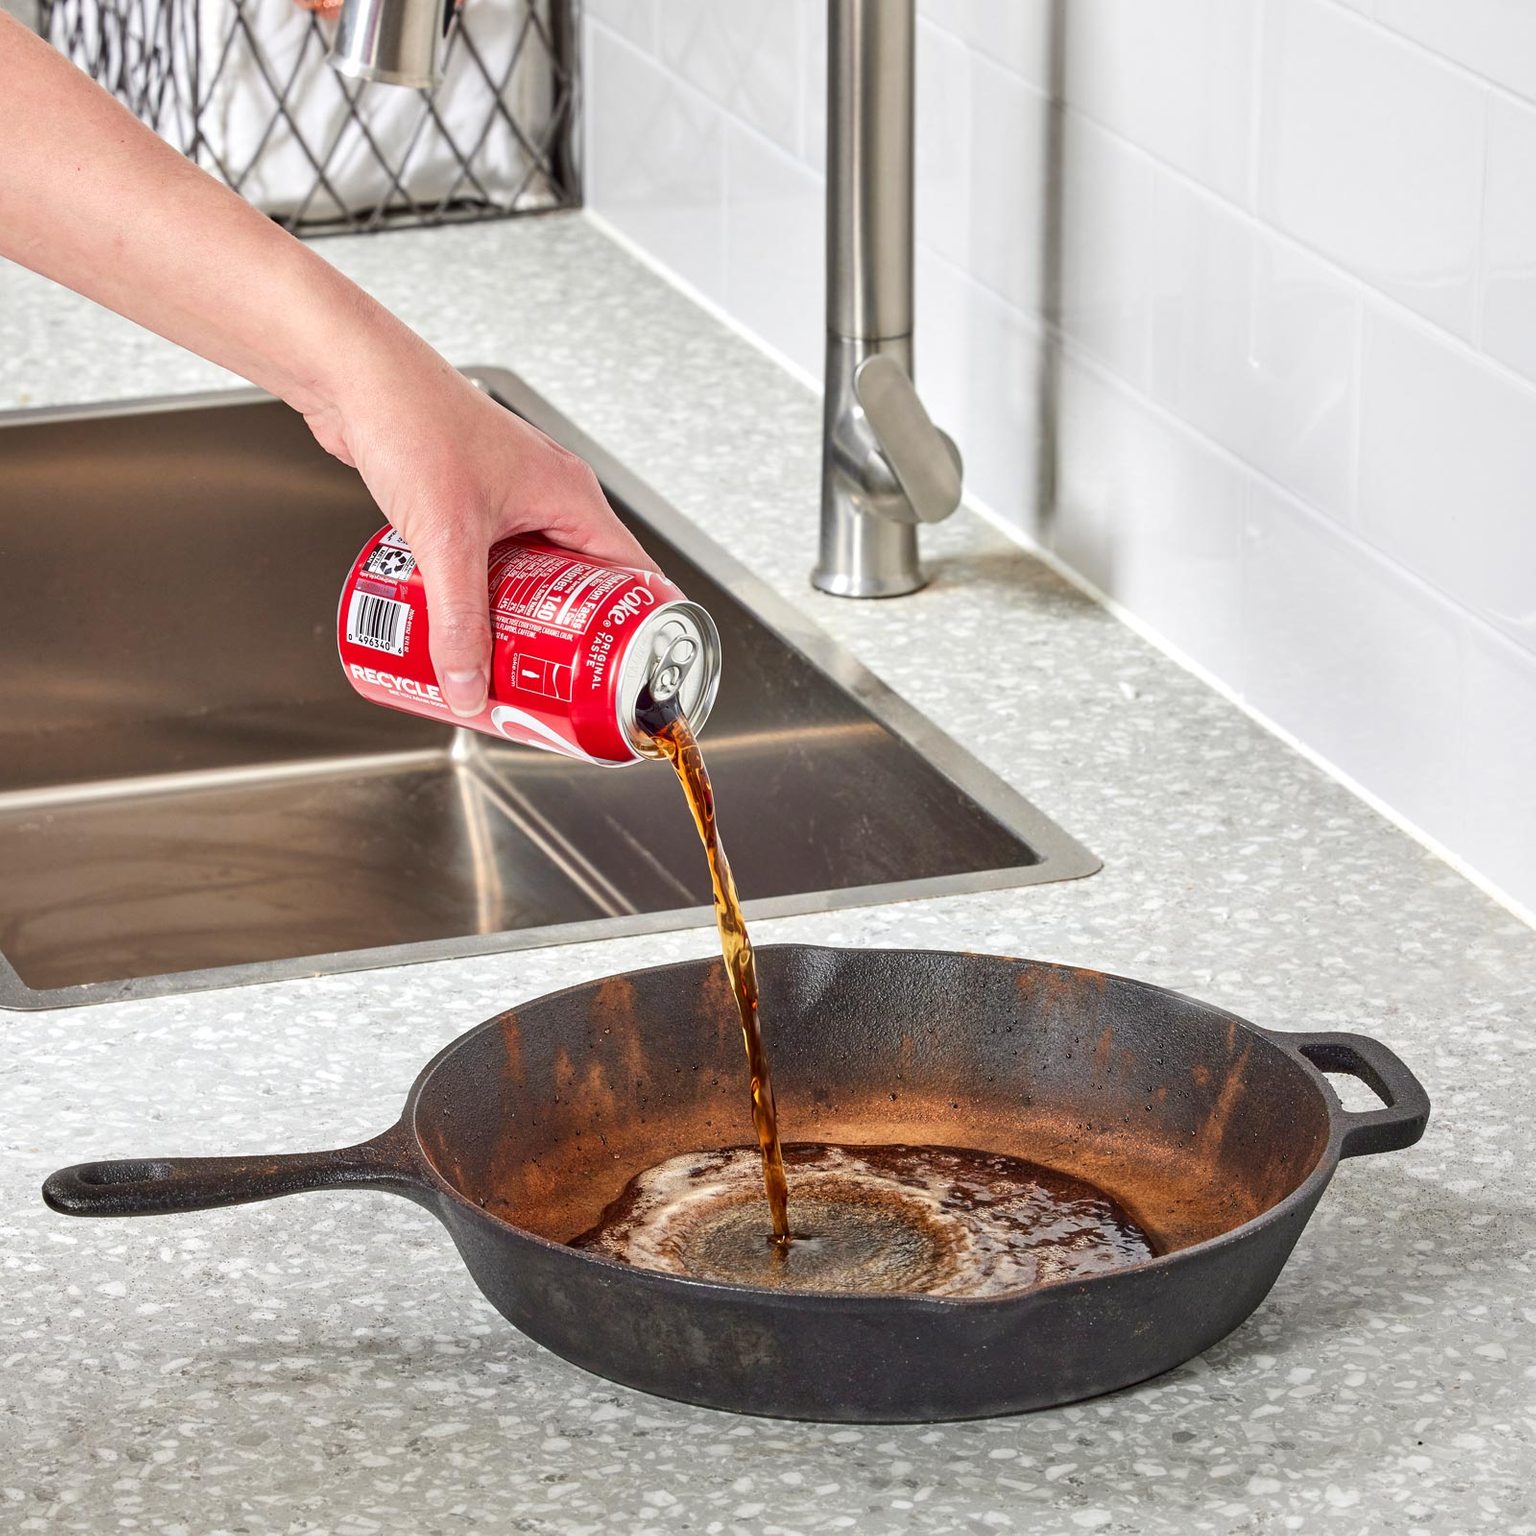 Use Coca-Cola on rusty pans